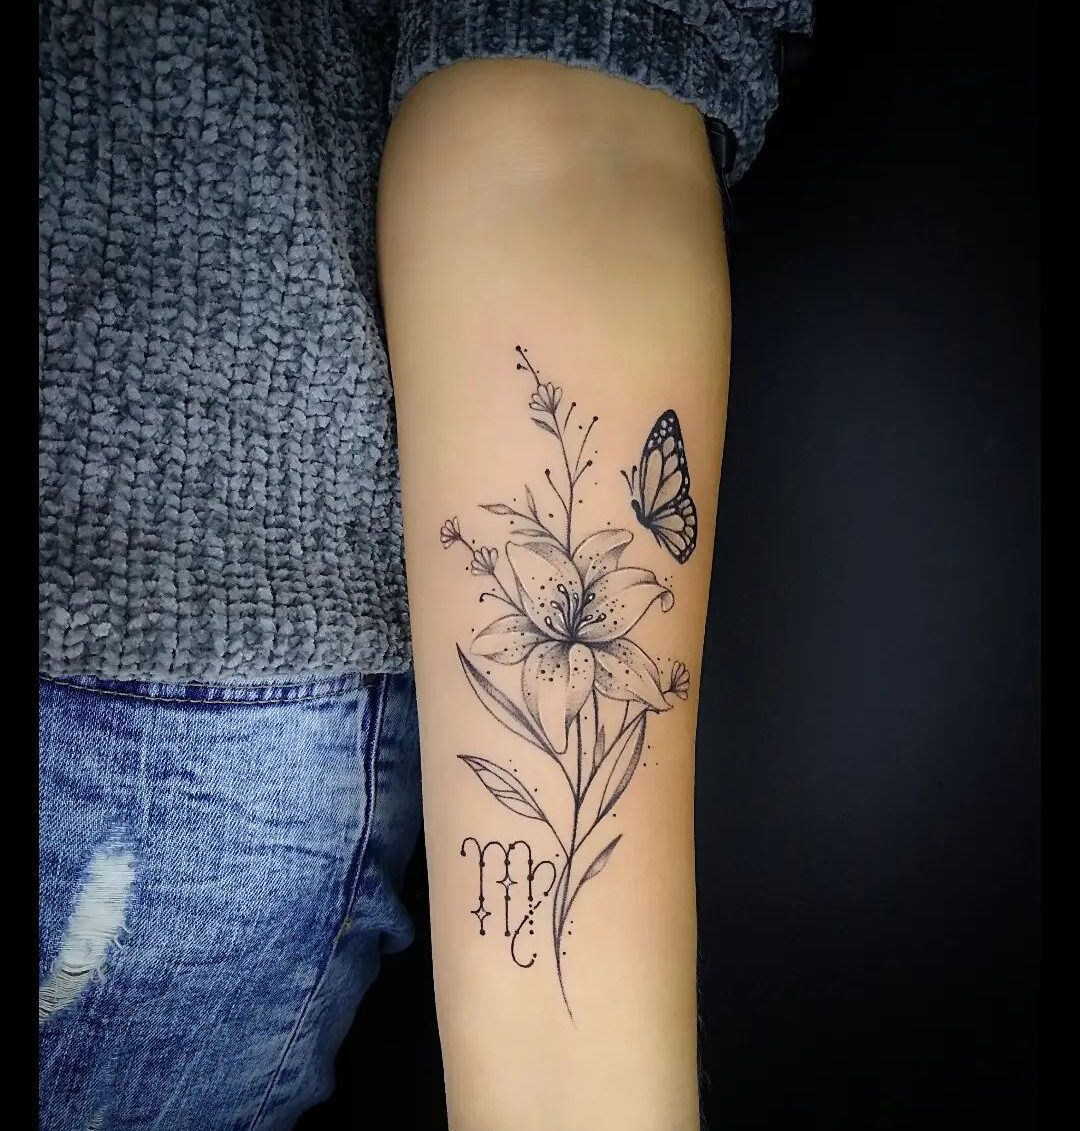 Virgo zodiac symbol and flower tattoo on the inner forearm